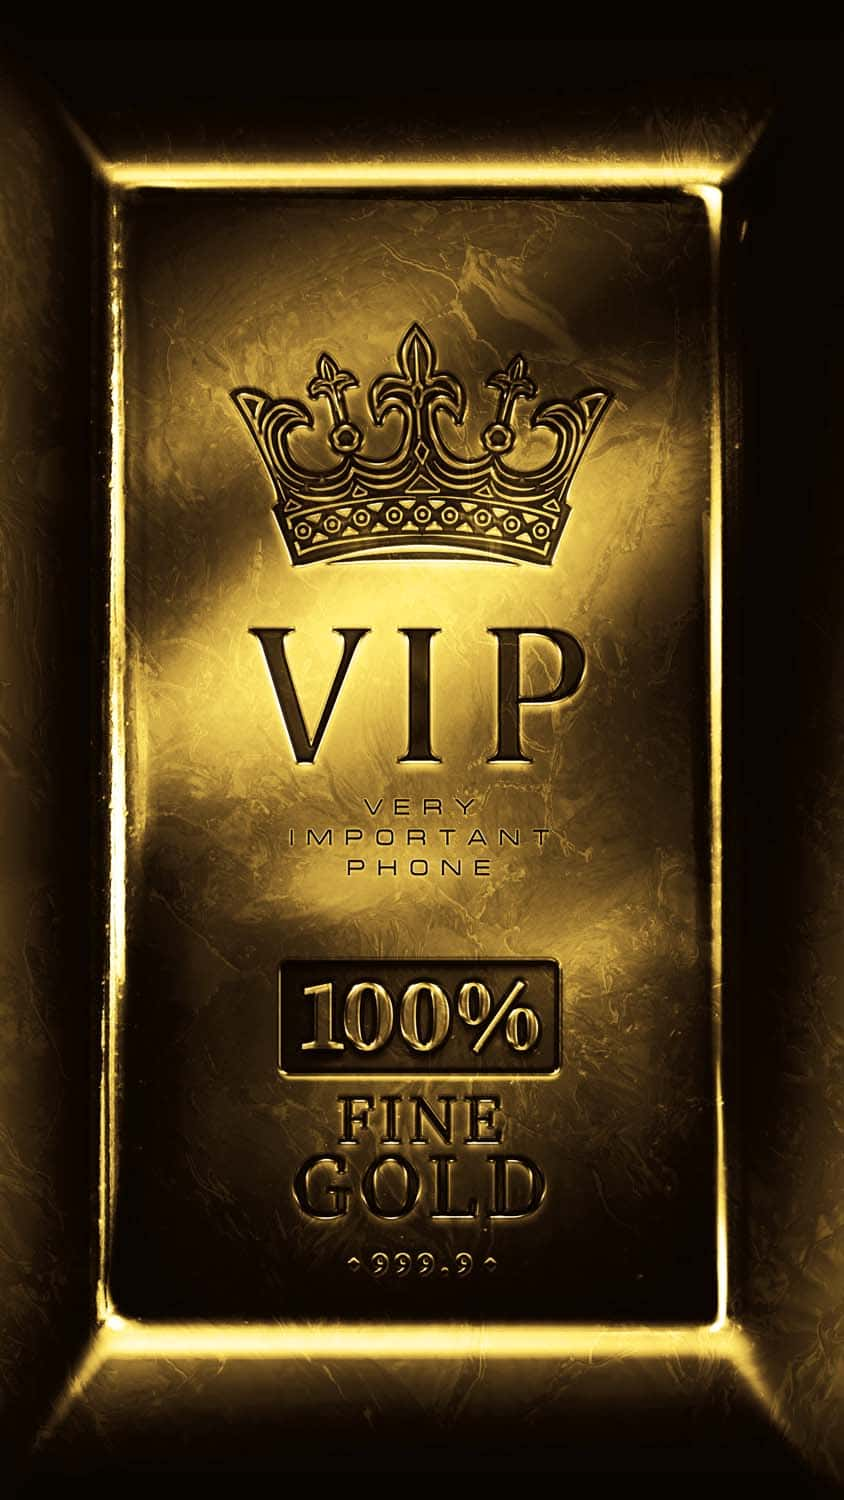 VIP Gold Phone IPhone Wallpaper HD IPhone Wallpapers Wallpaper Download   MOONAZ